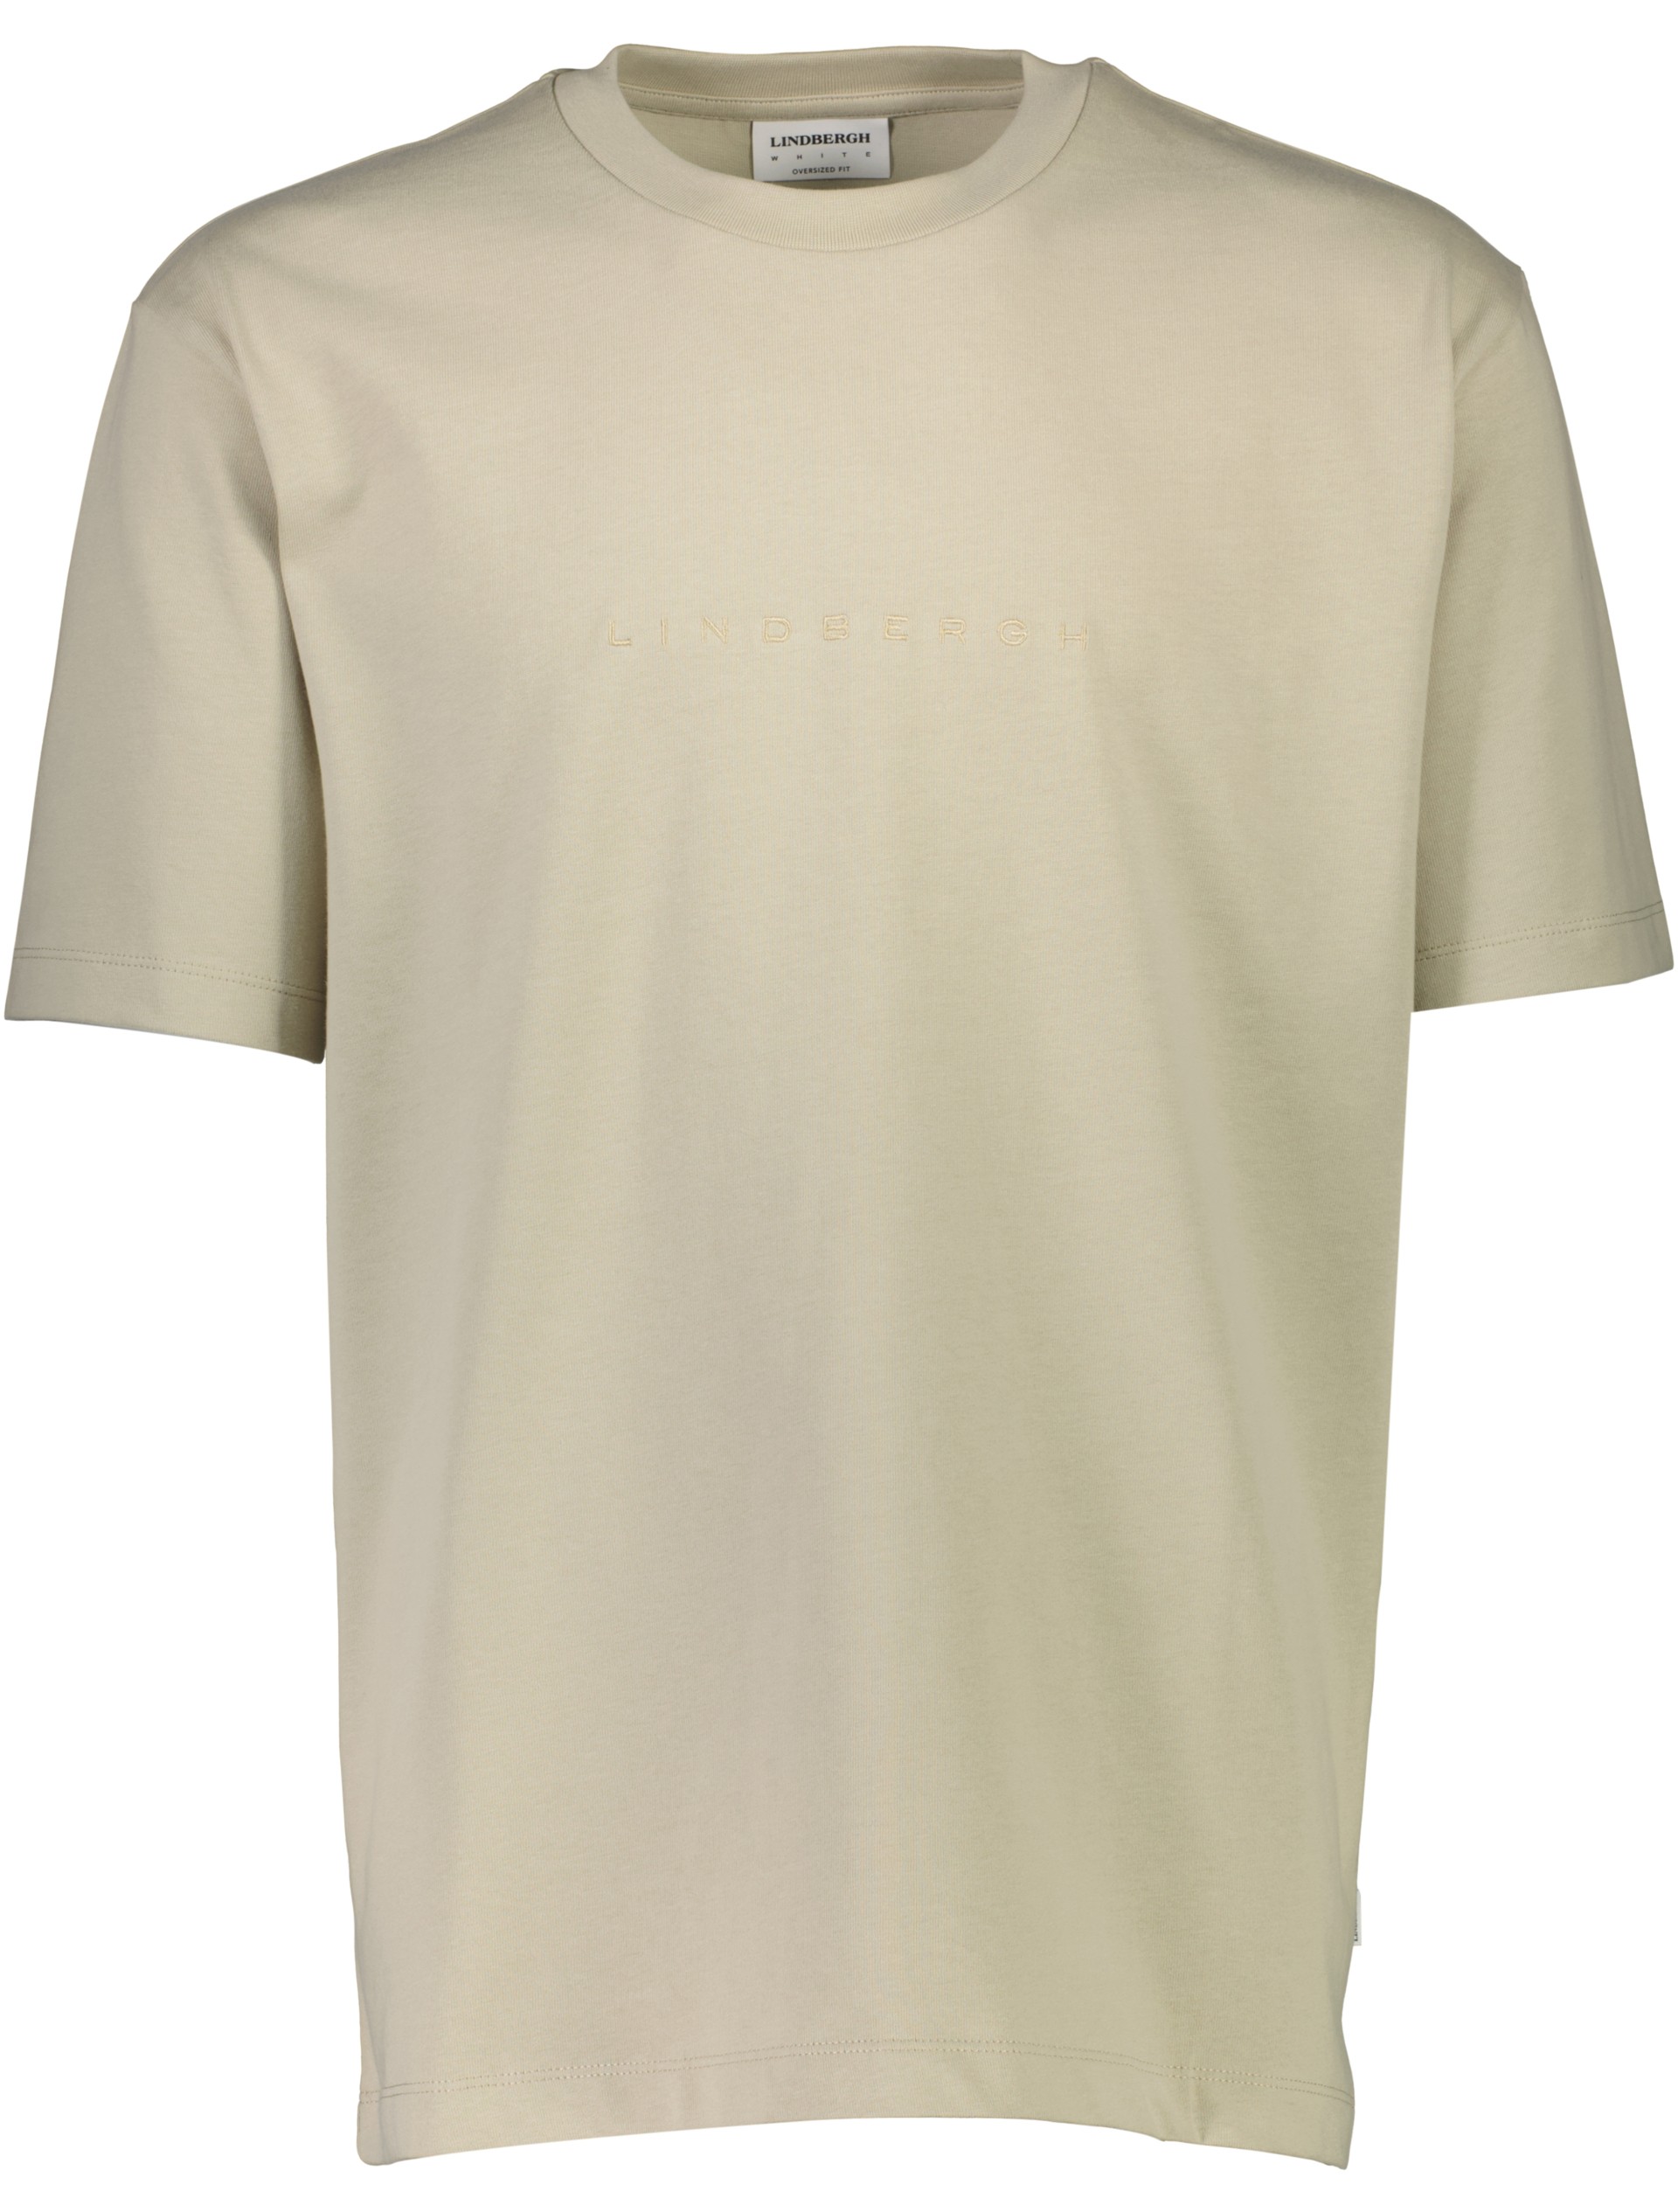 Lindbergh T-shirt groen / pale army